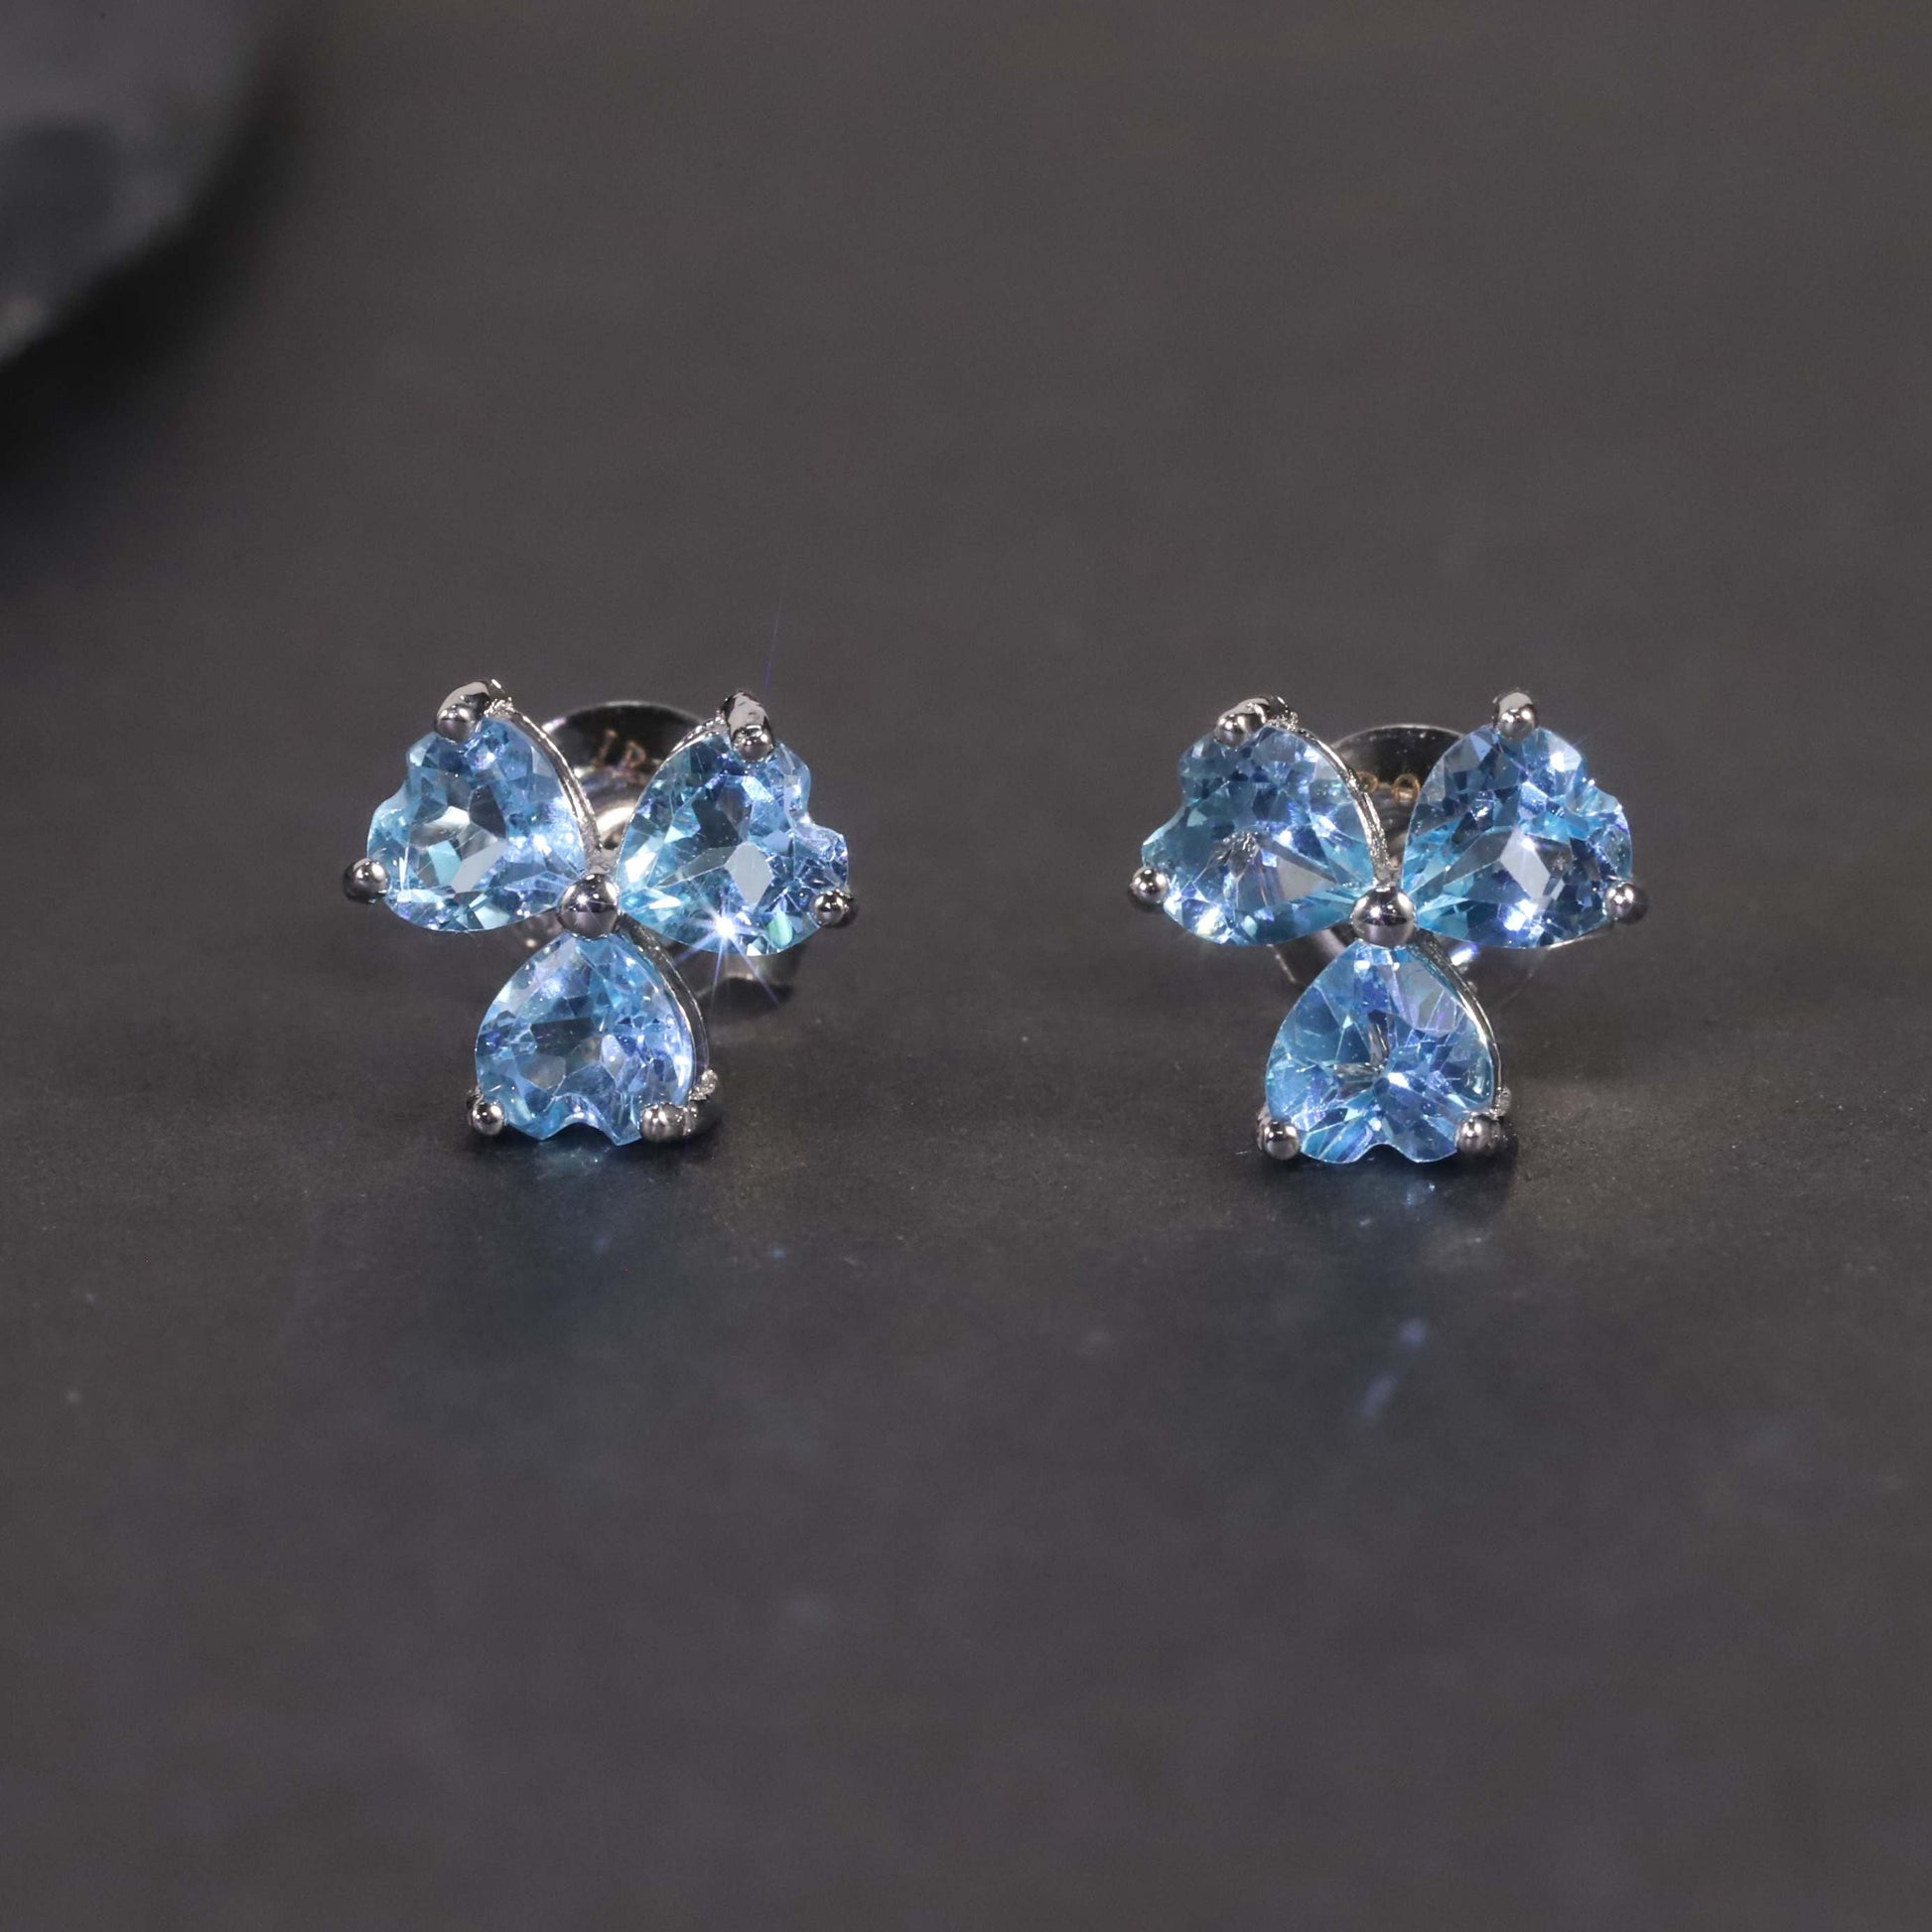 view on dark background of Swiss Blue Flower Stud Earrings